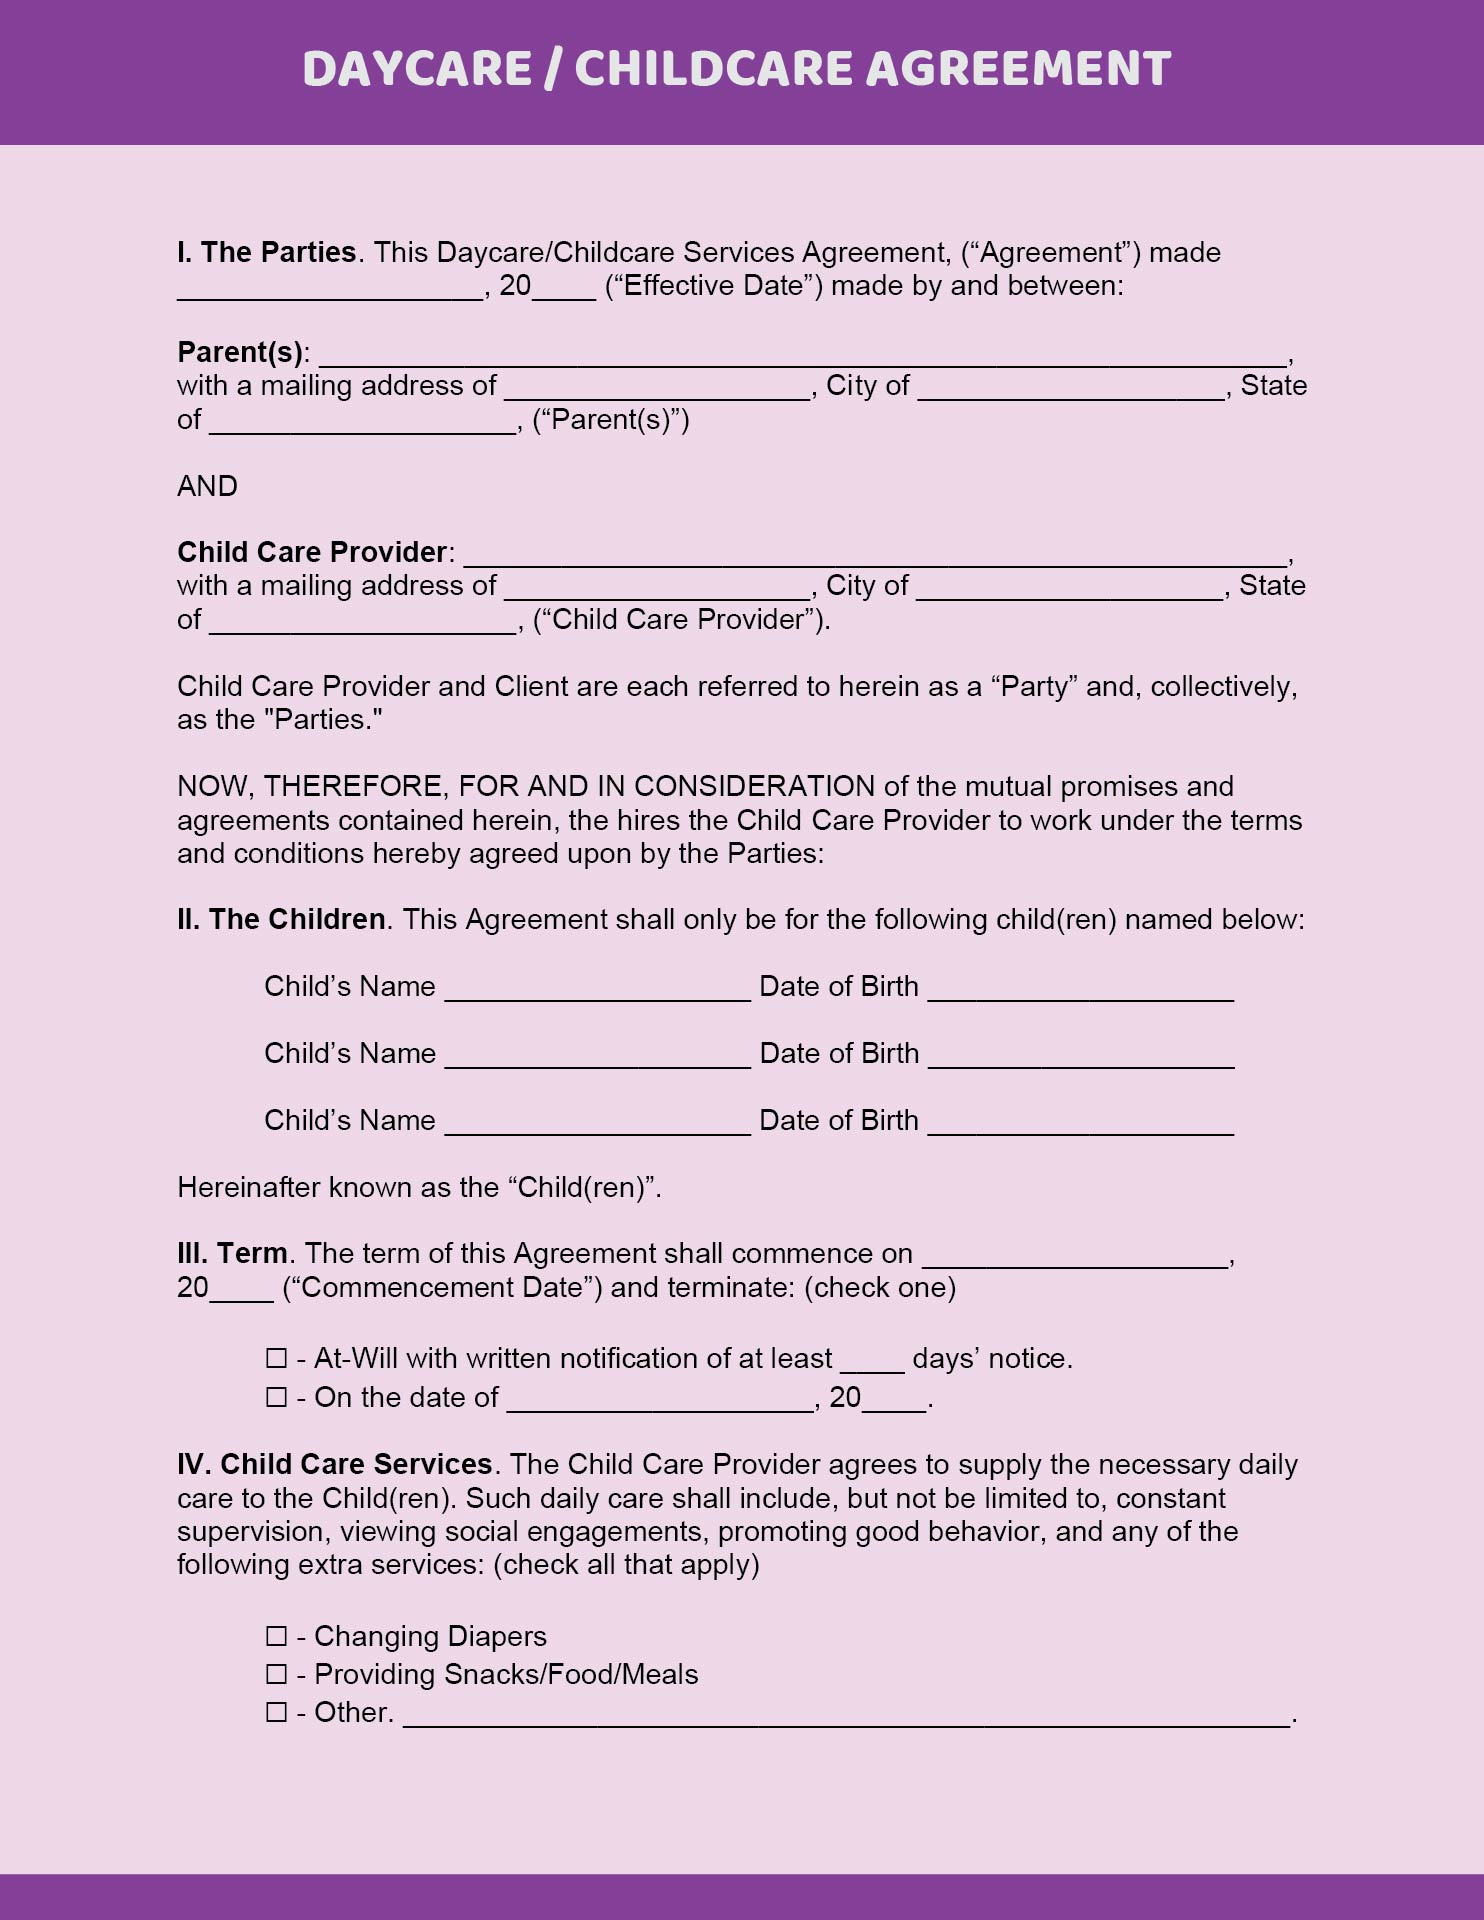 Printable Home Daycare Forms